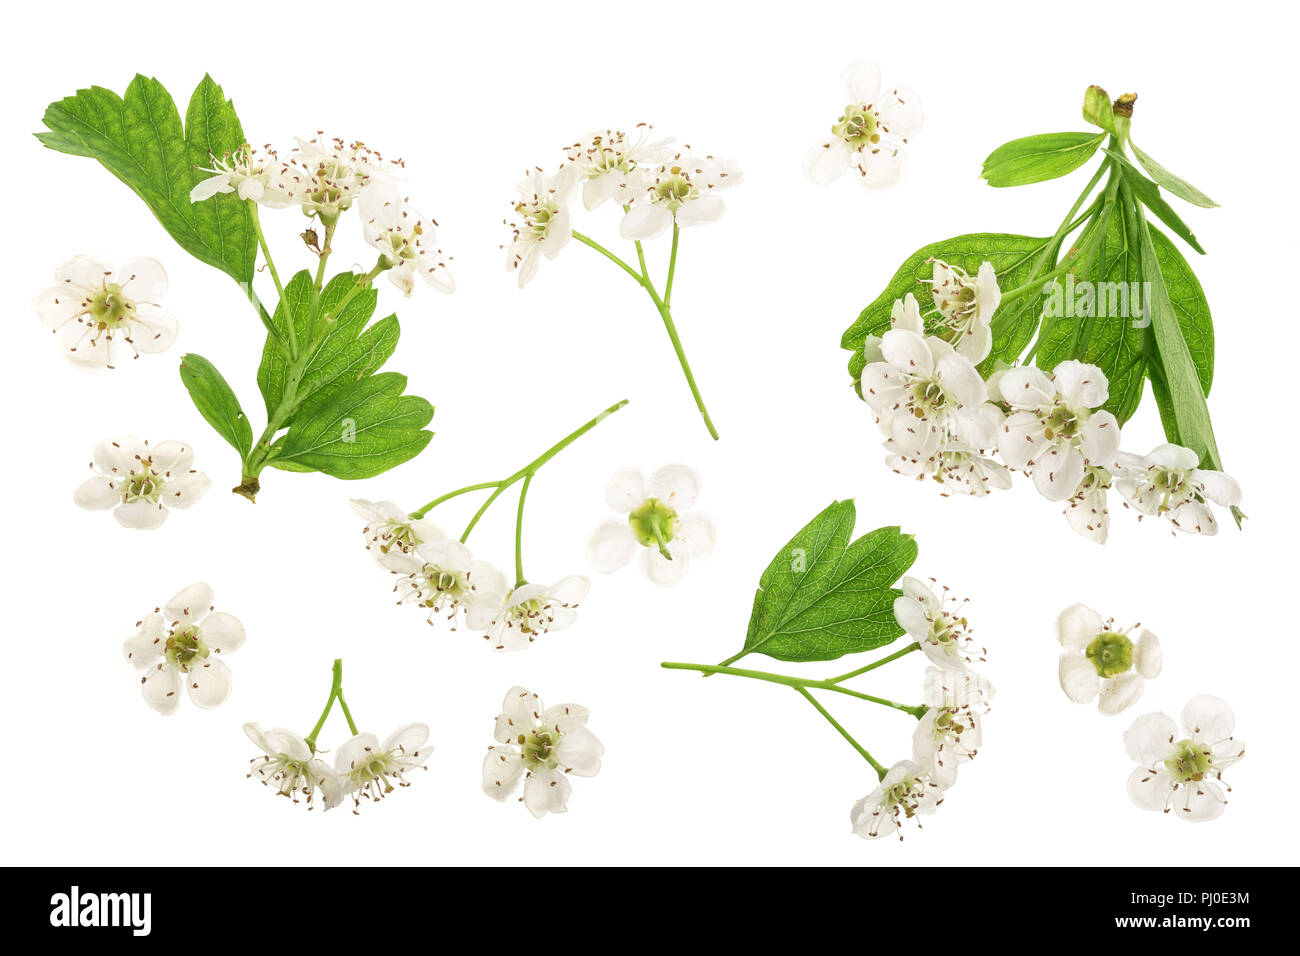 Hawthorn or Crataegus monogyna flowers isolated on a white background Stock Photo